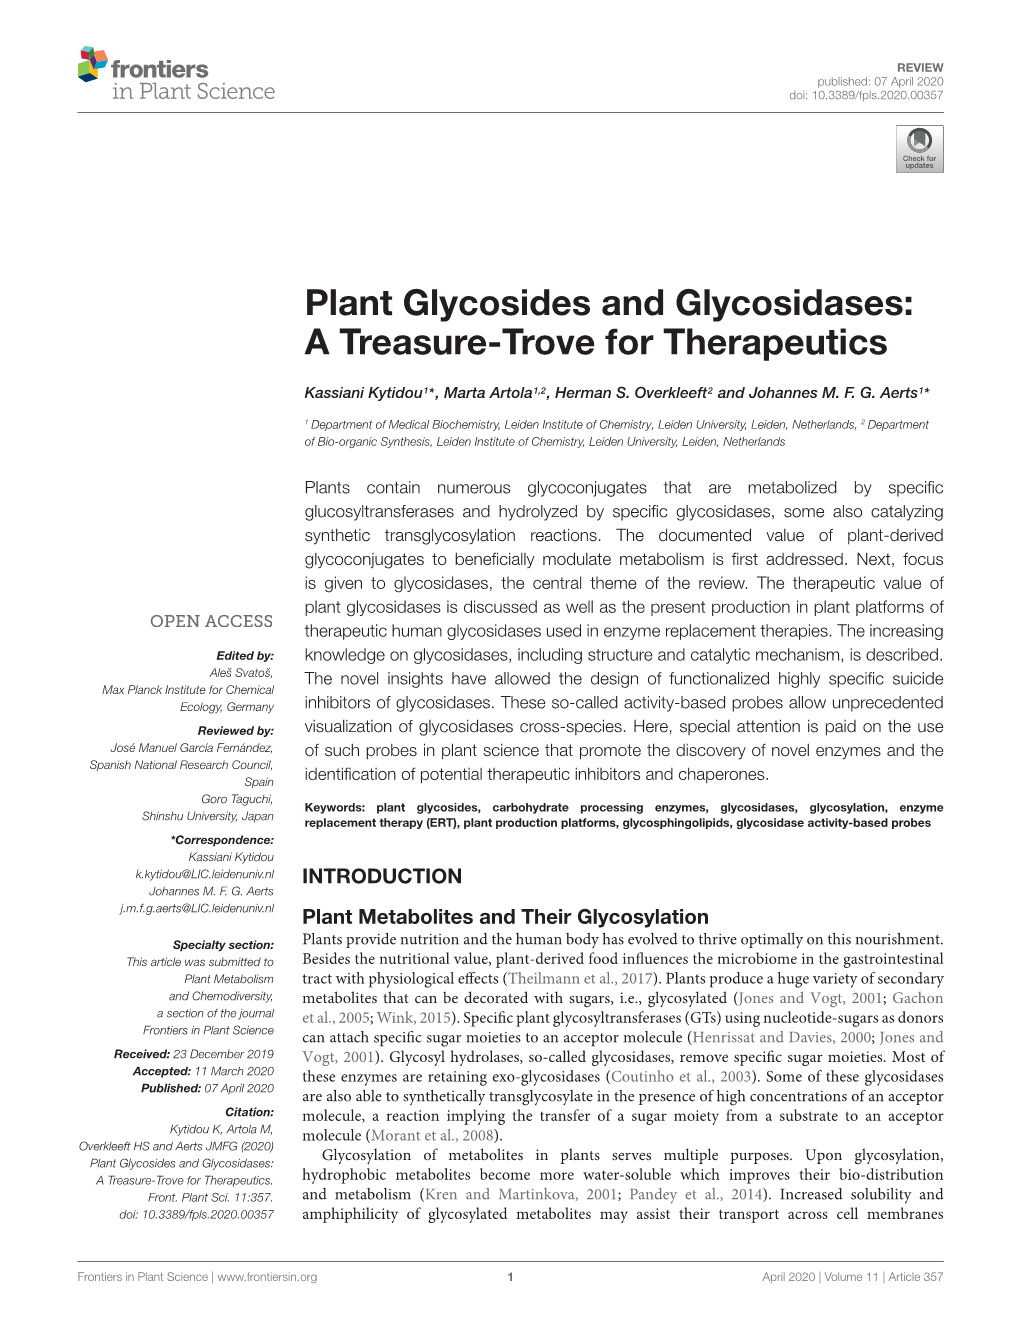 Plant Glycosides and Glycosidases: a Treasure-Trove for Therapeutics